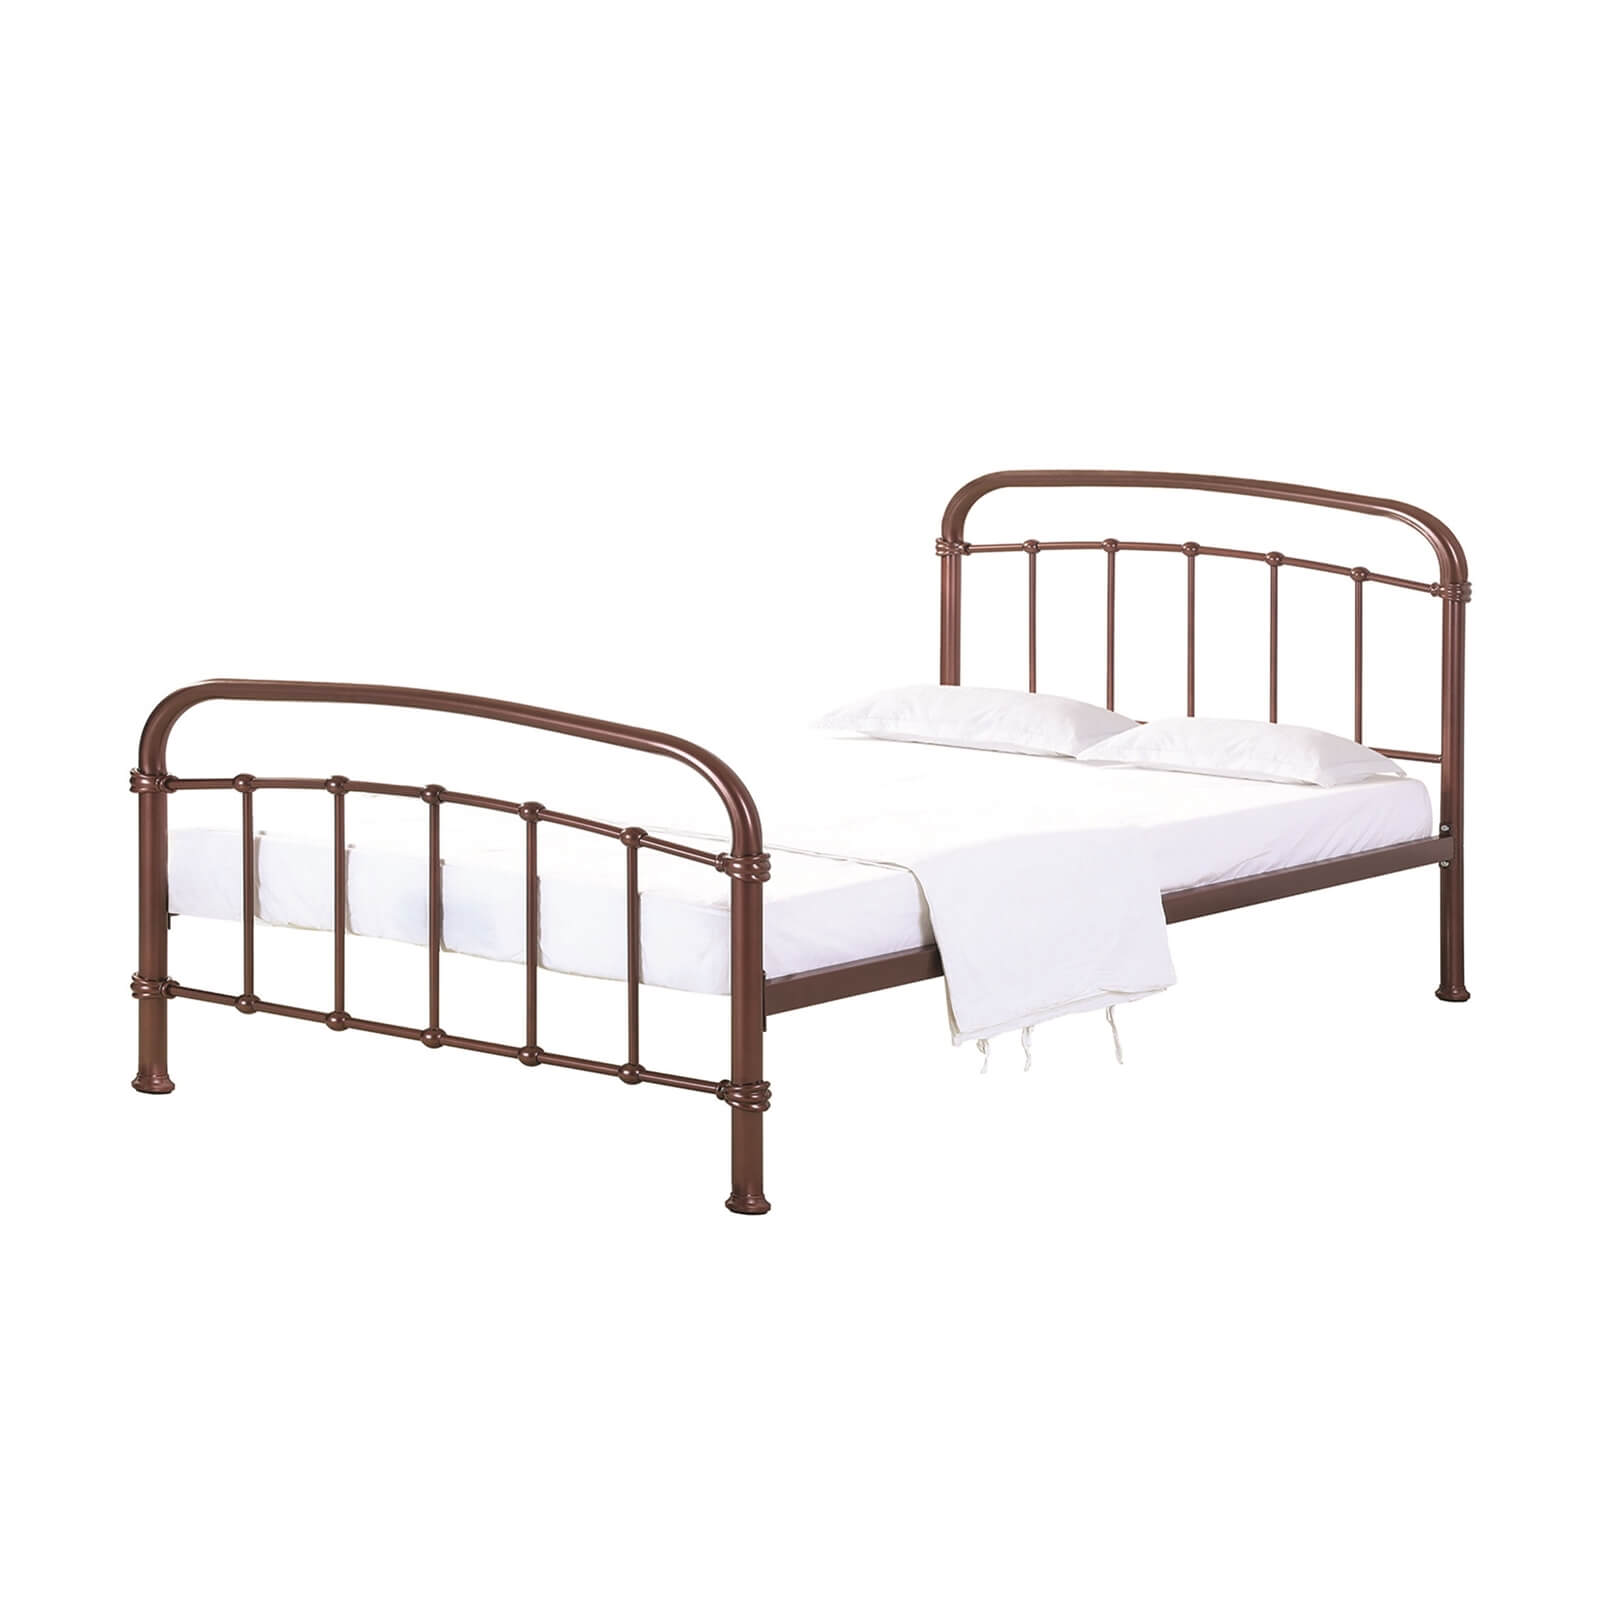 Halston Double Bed - Copper